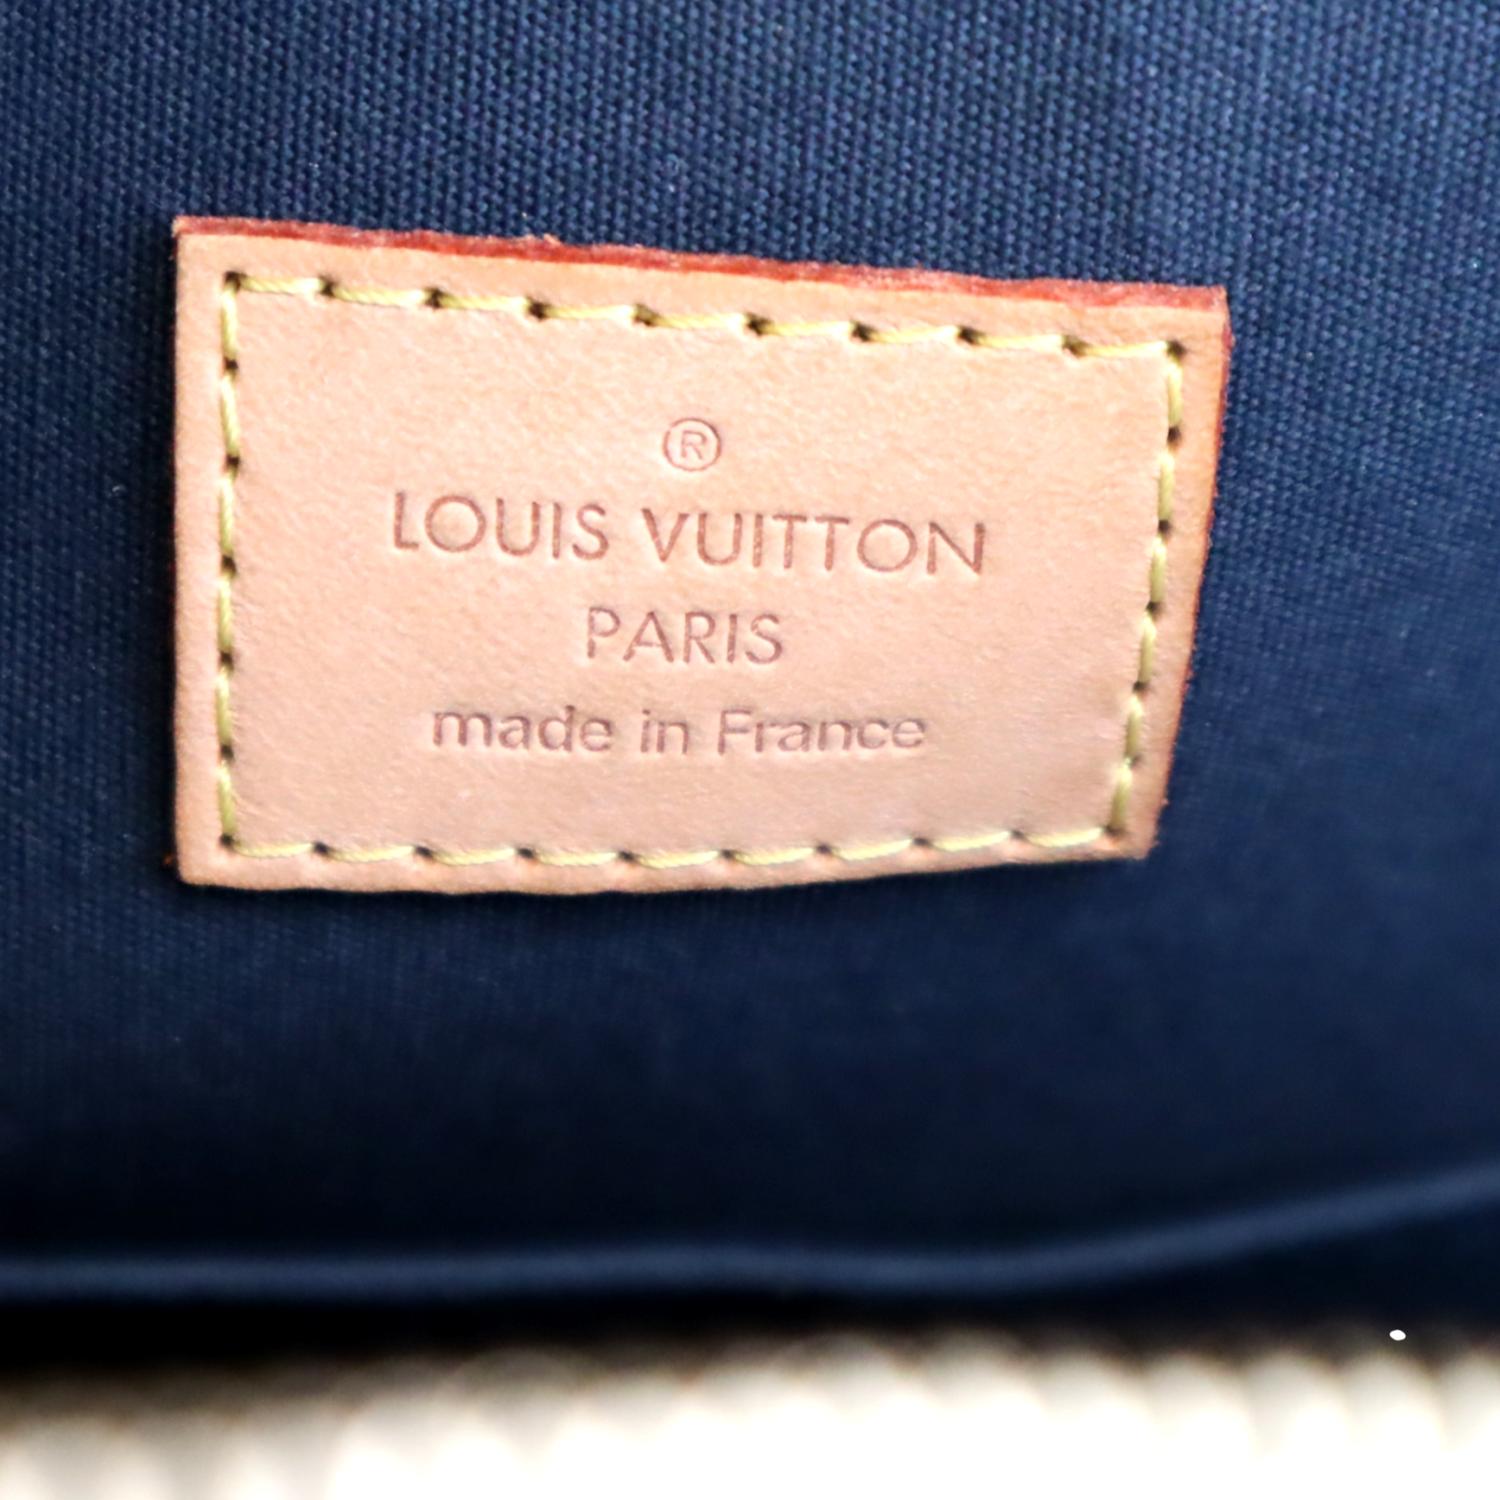 Louis Vuitton Alma Monogram Vernis Gm Satchel in Pale Green at